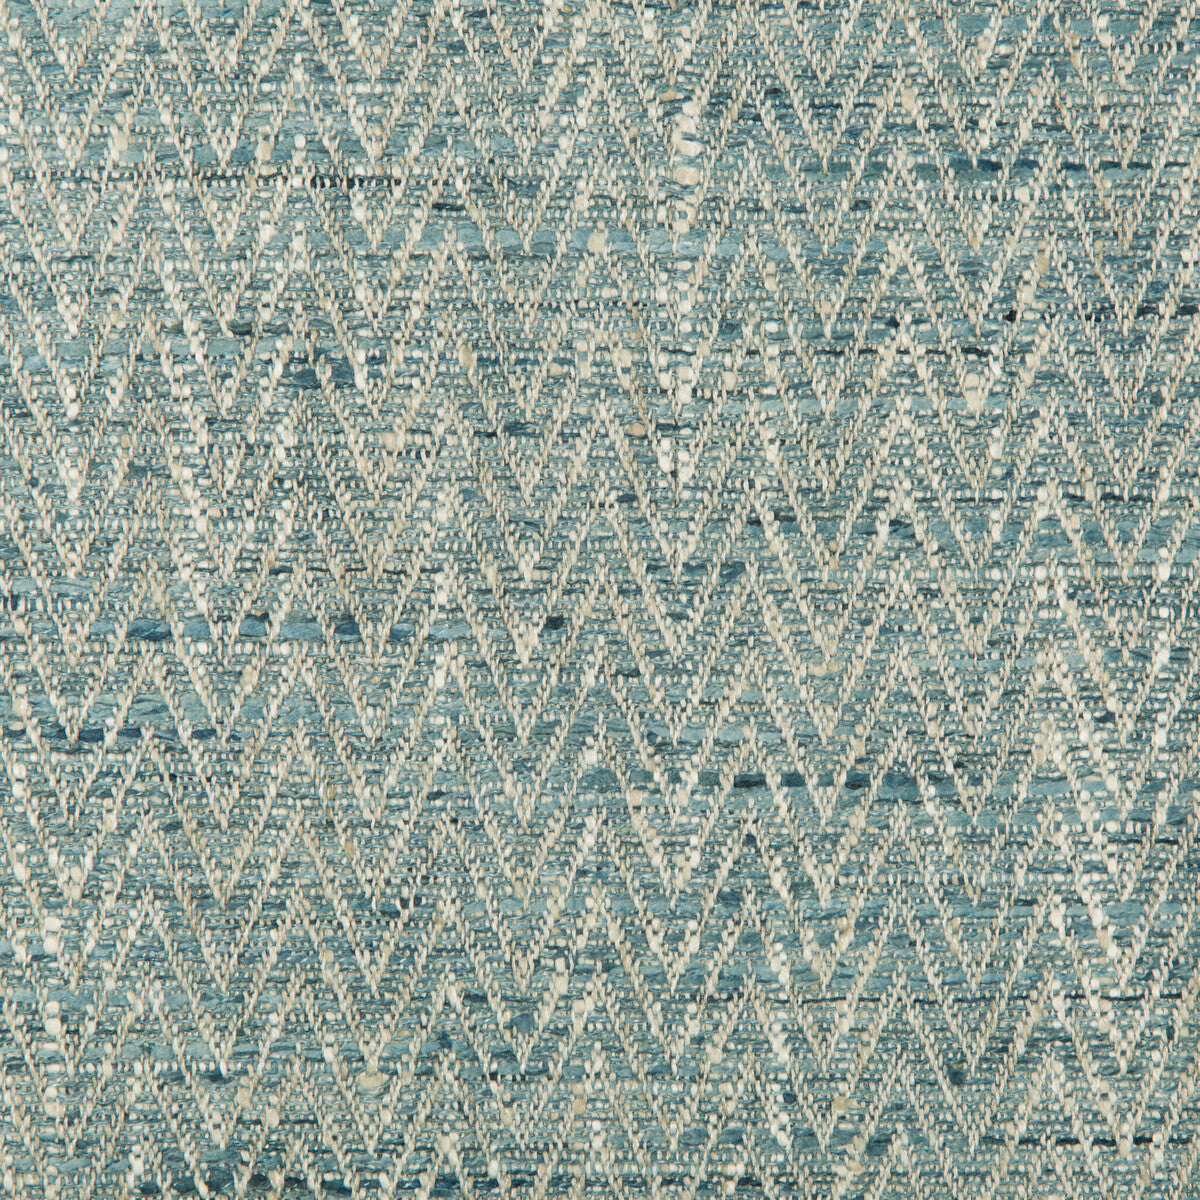 Kravet Smart fabric in 34092-511 color - pattern 34092.511.0 - by Kravet Smart